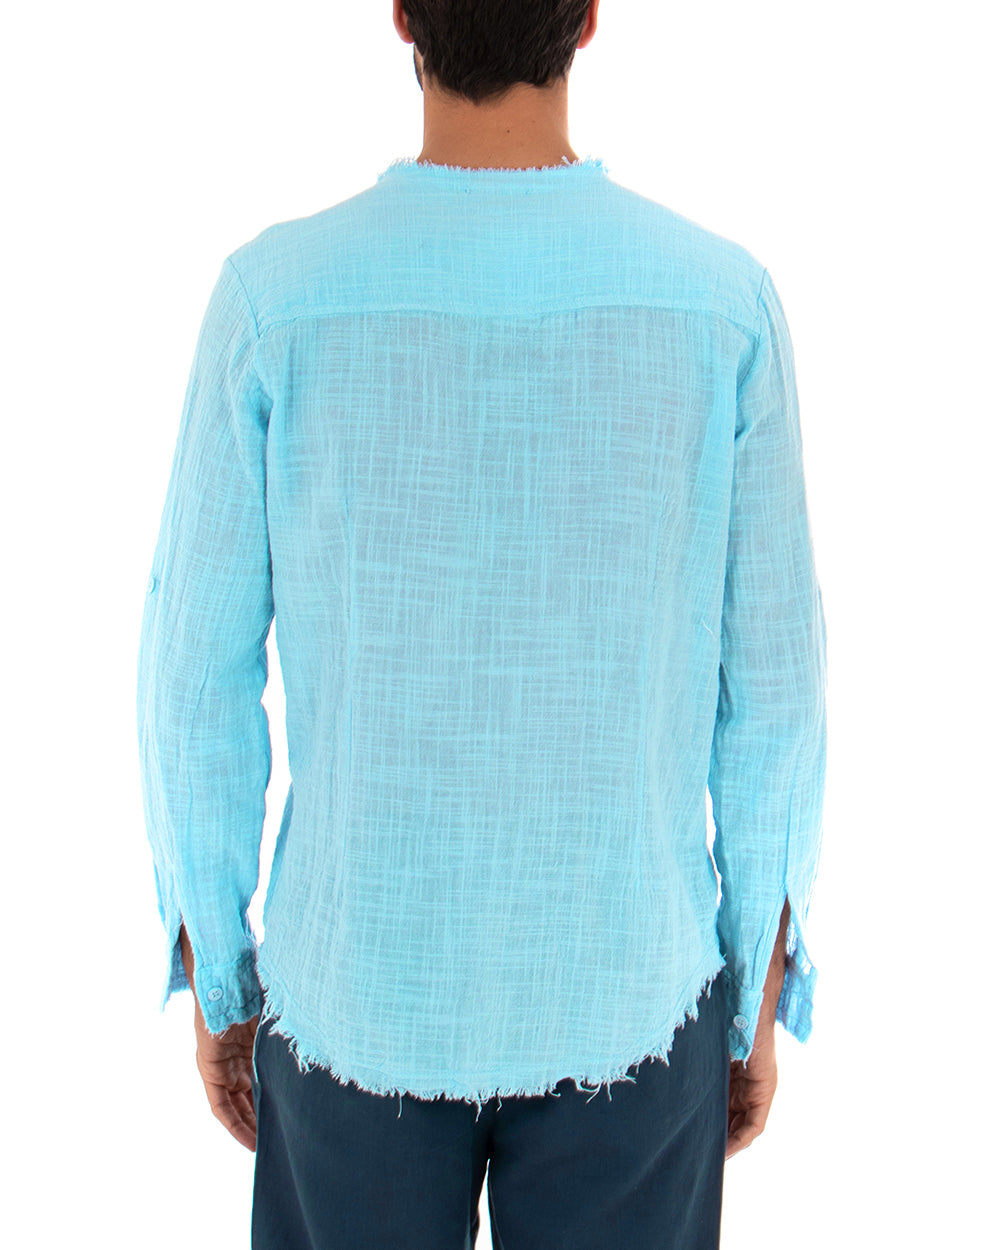 Camicia Uomo Sfrangiata Tinta Unita Azzurro Manica Lunga Casual Cotone Lino GIOSAL-C2834A